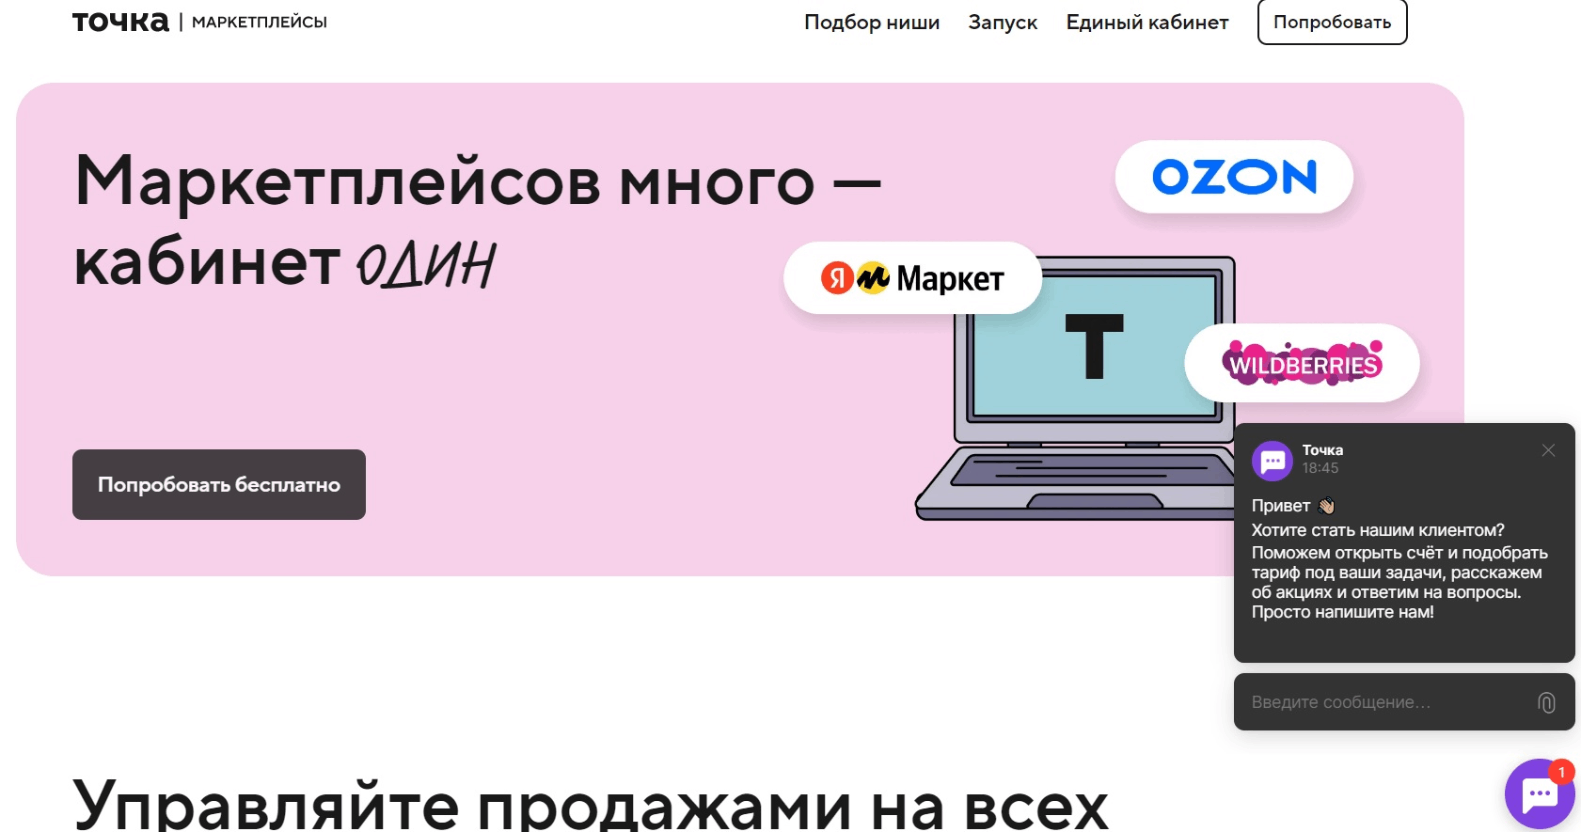 Аналитическая программа Точка для Яндекс.Маркет, Ozon, Wildberries